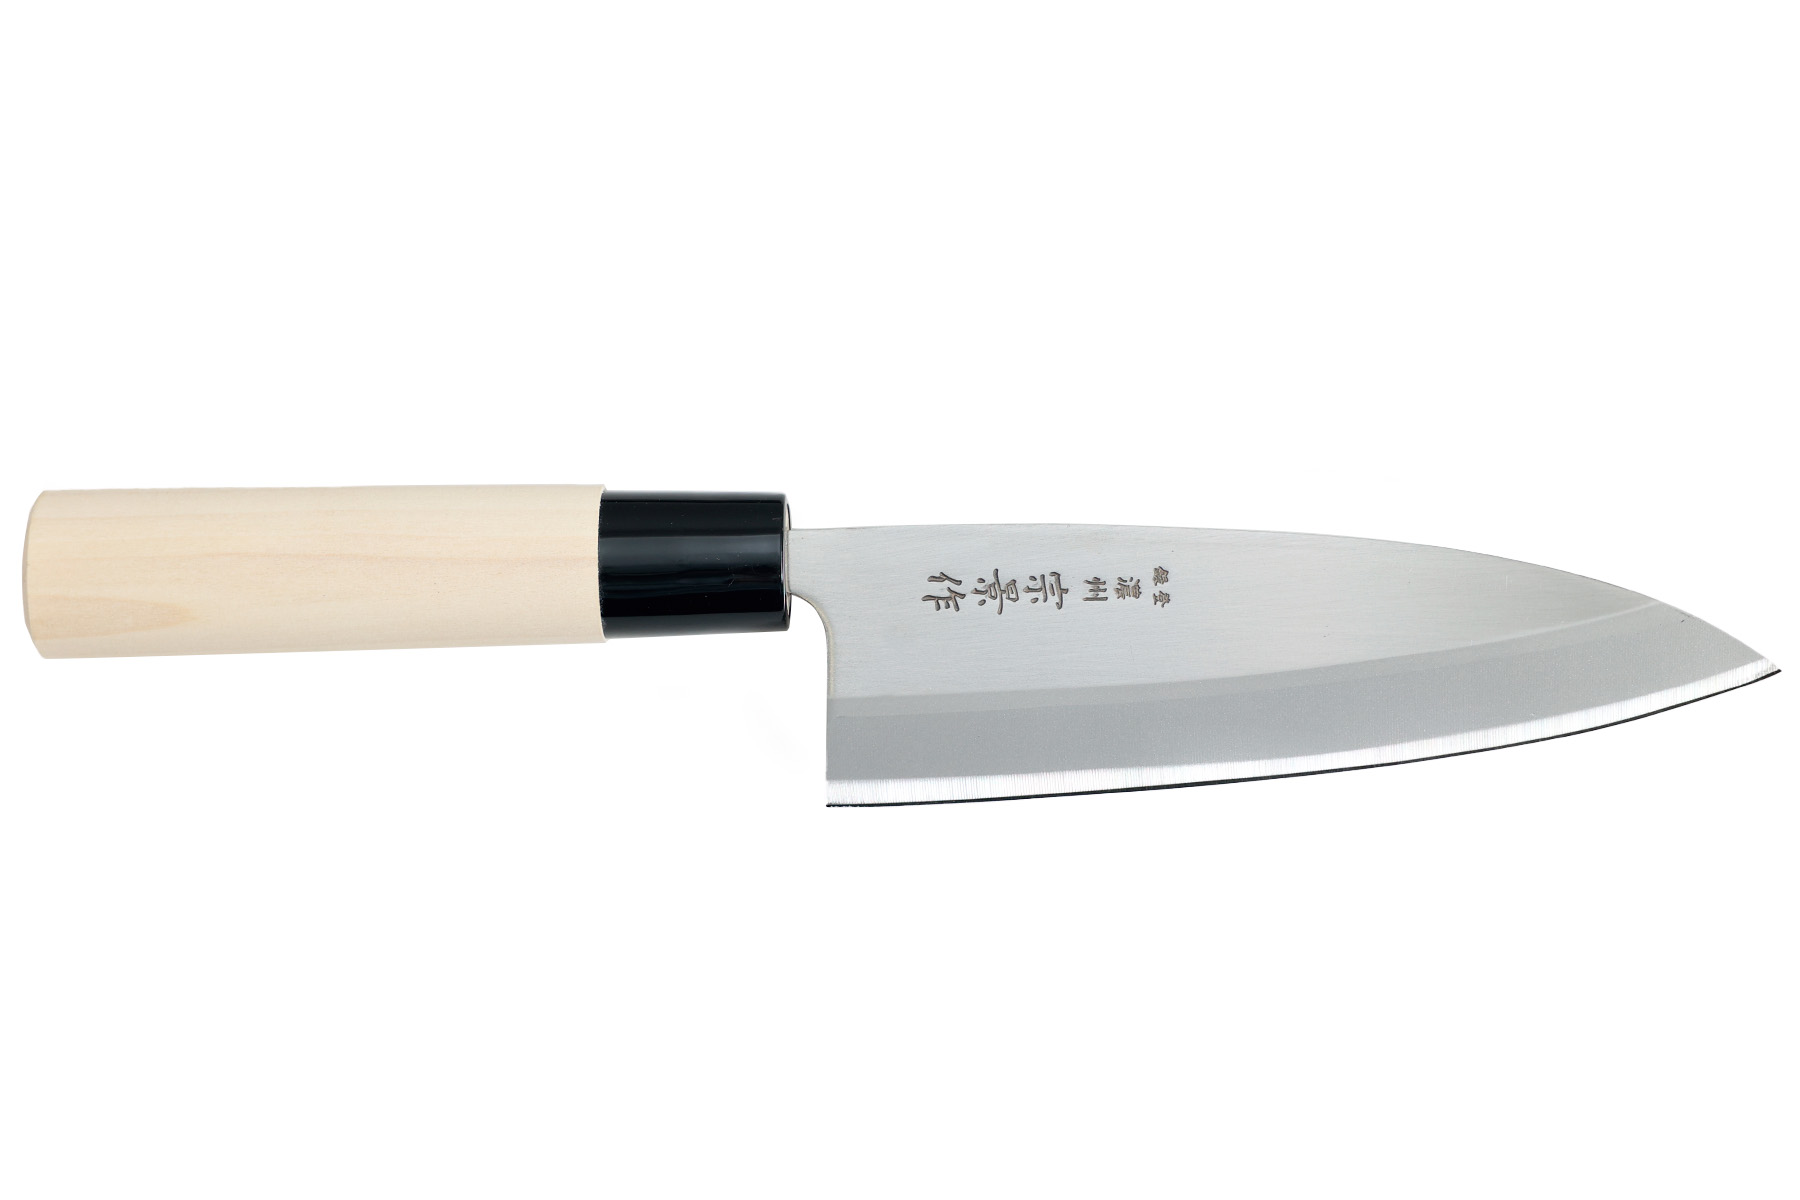 Couteau japonais Haiku Home de Chroma - Couteau deba 16 cm